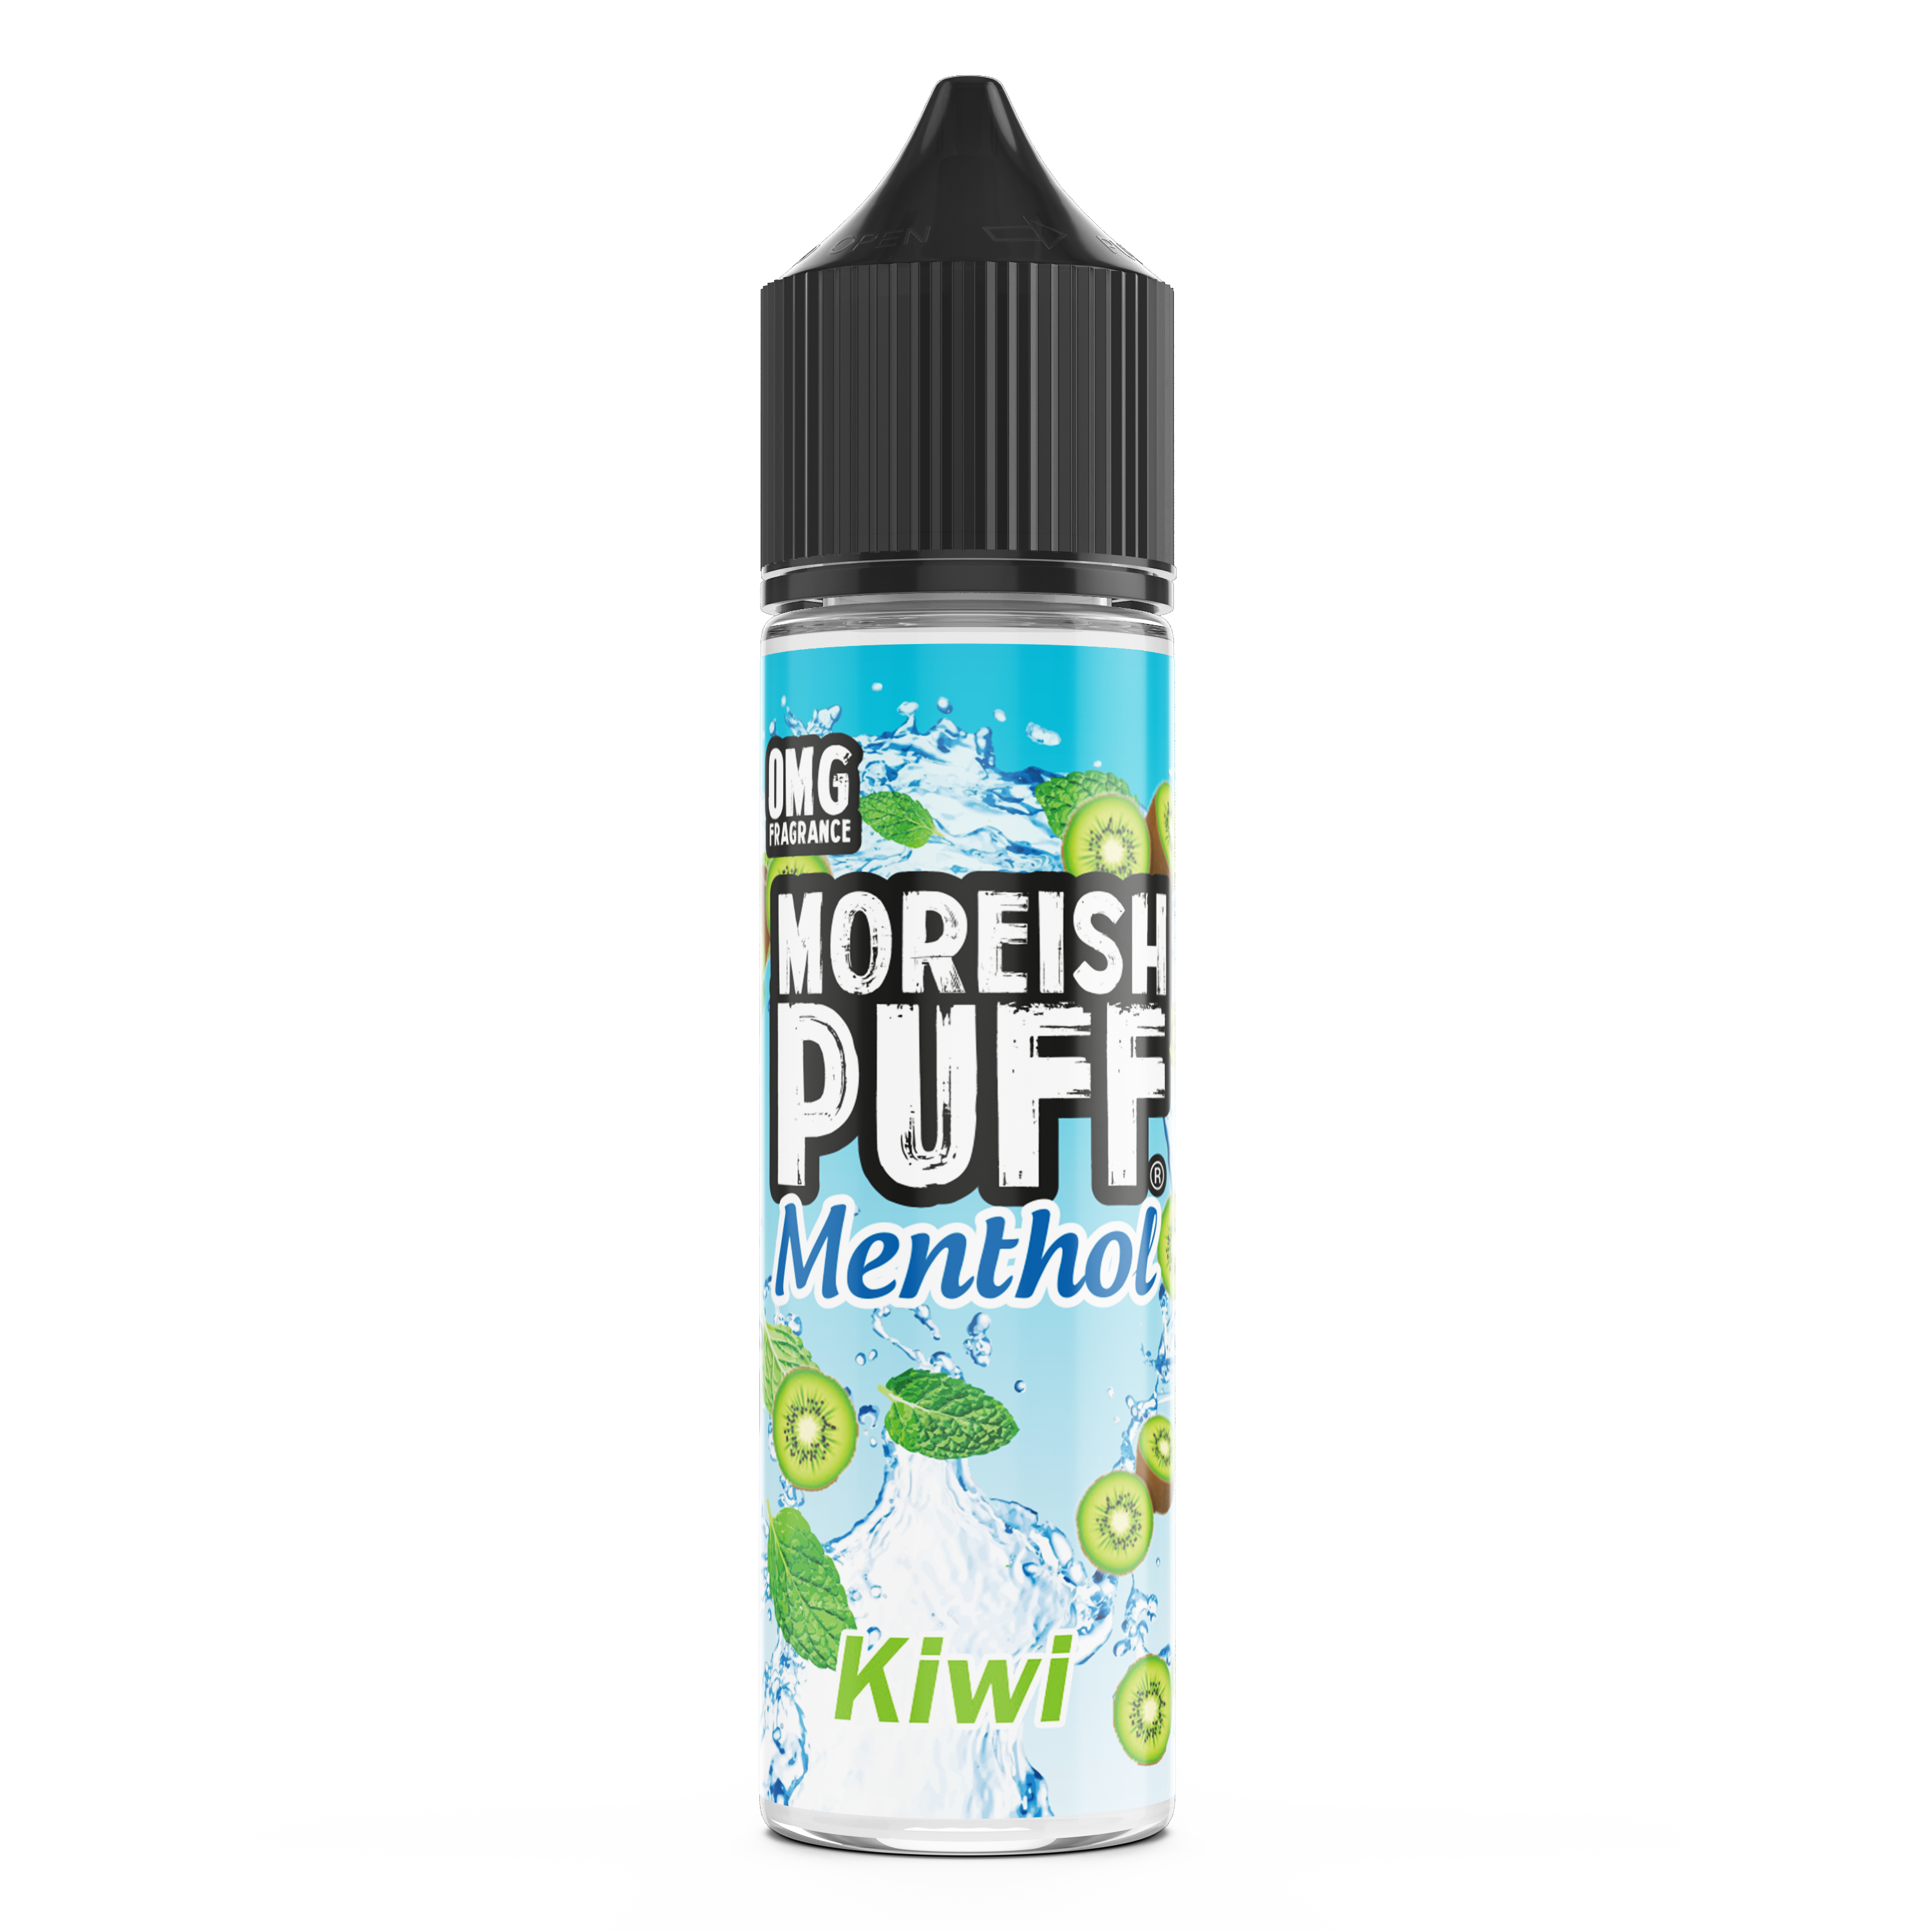 Moreish Puff Kiwi Menthol 50ml Shortfill